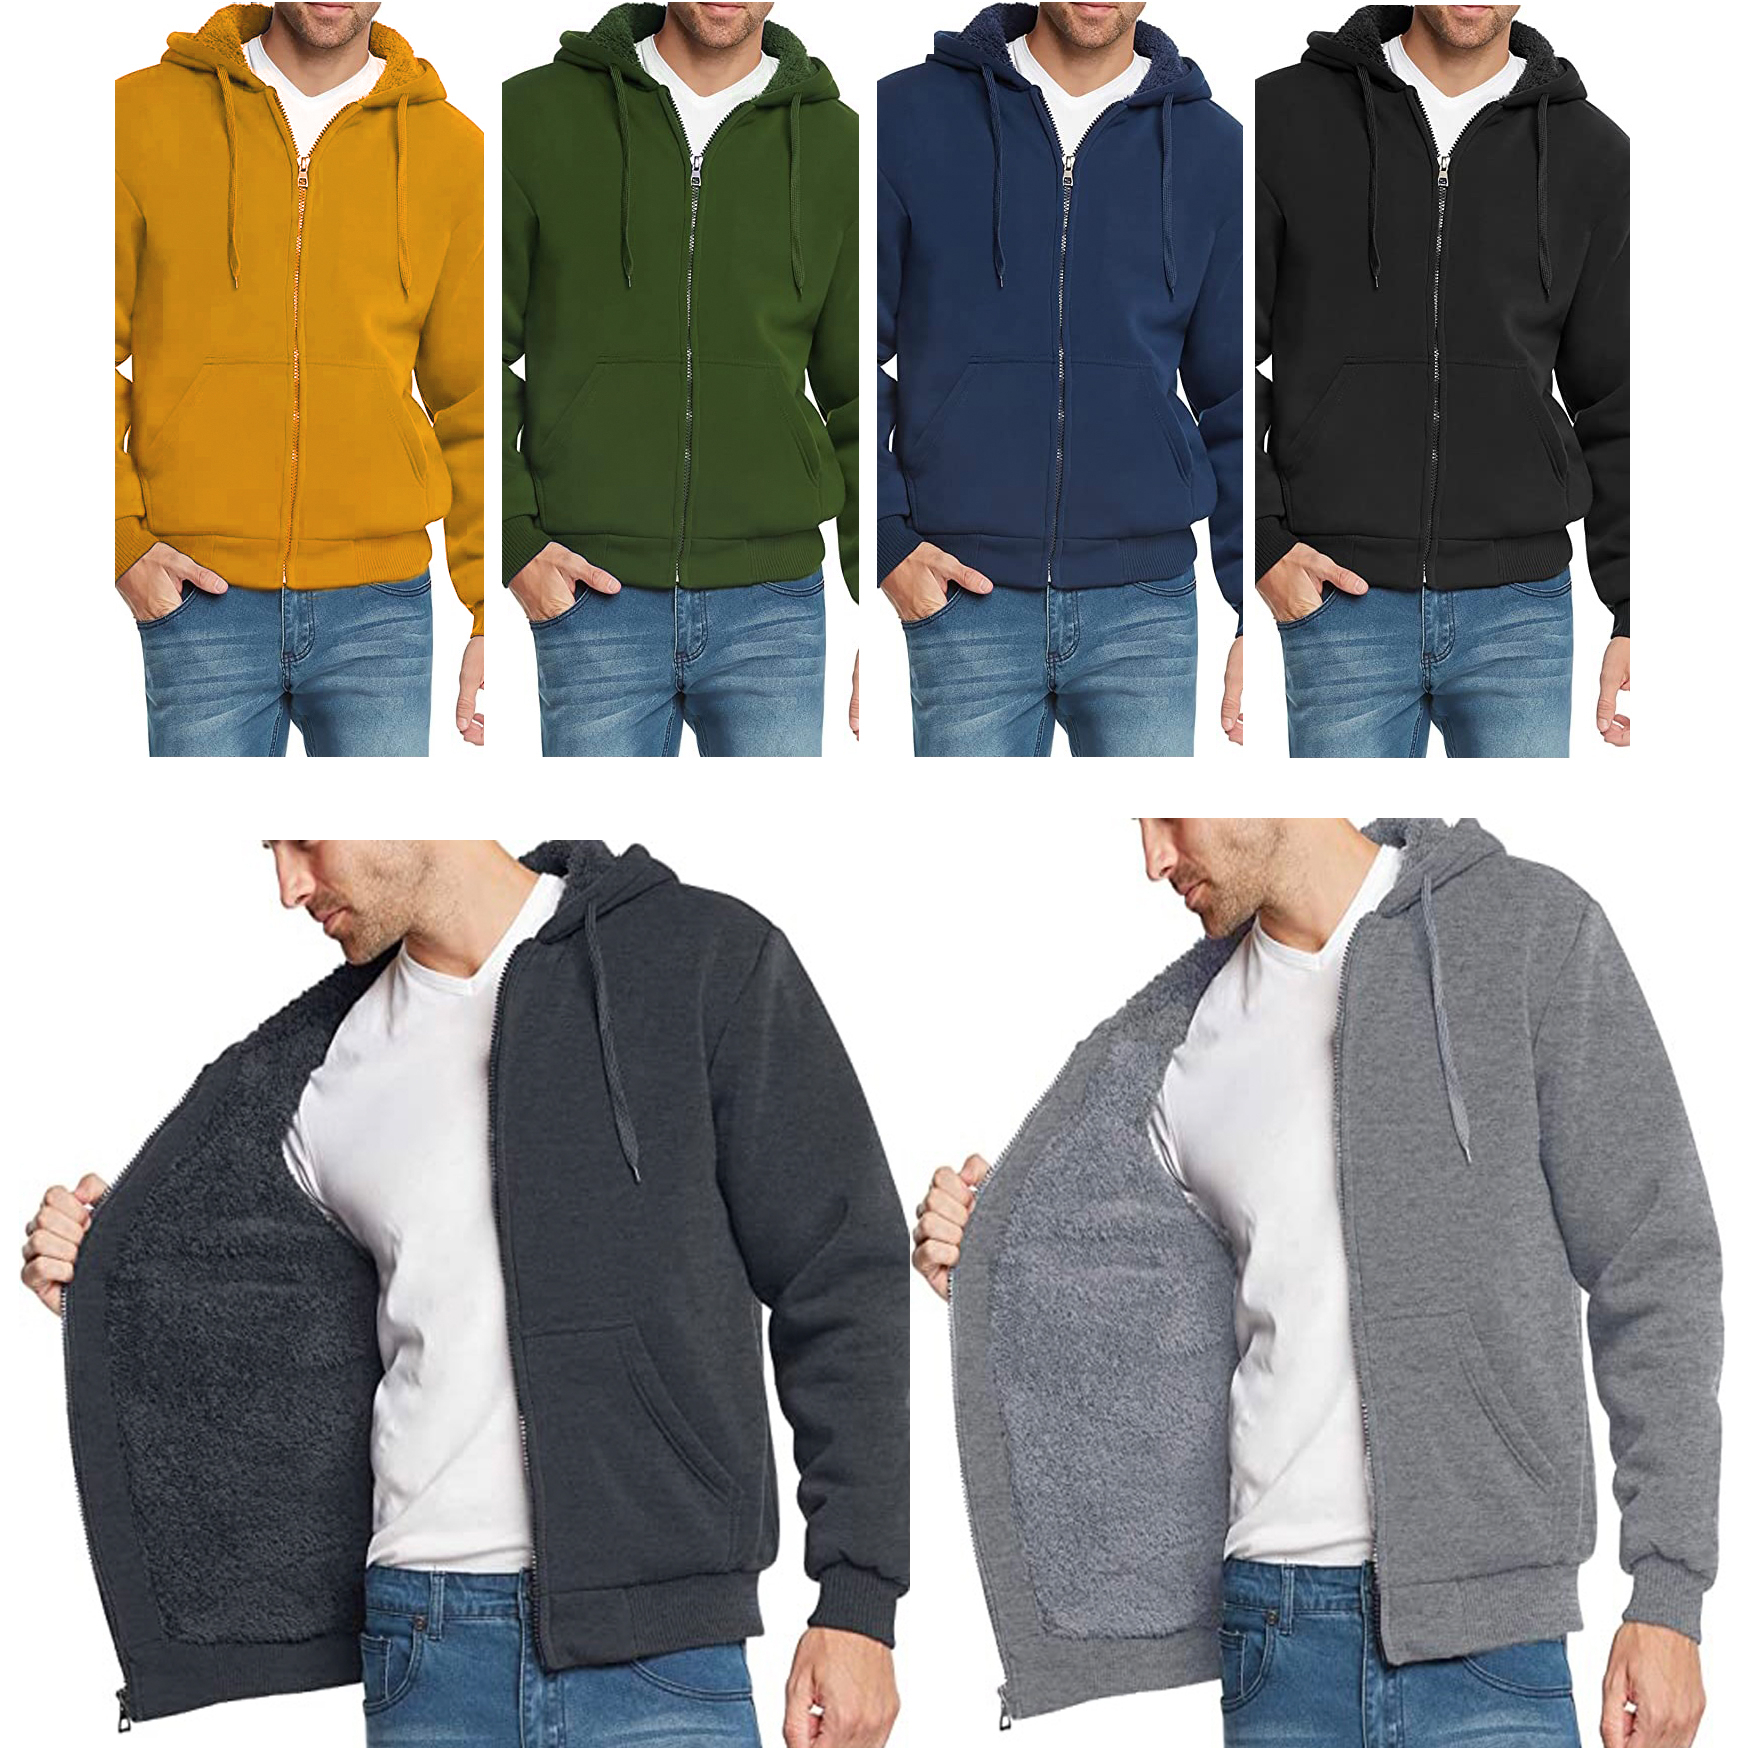 Men's Big & Tall Heavyweight Soft Sherpa Lined Fleece Zip-Up Hoodie Sweater Jacket - Burgundy, Xx-large